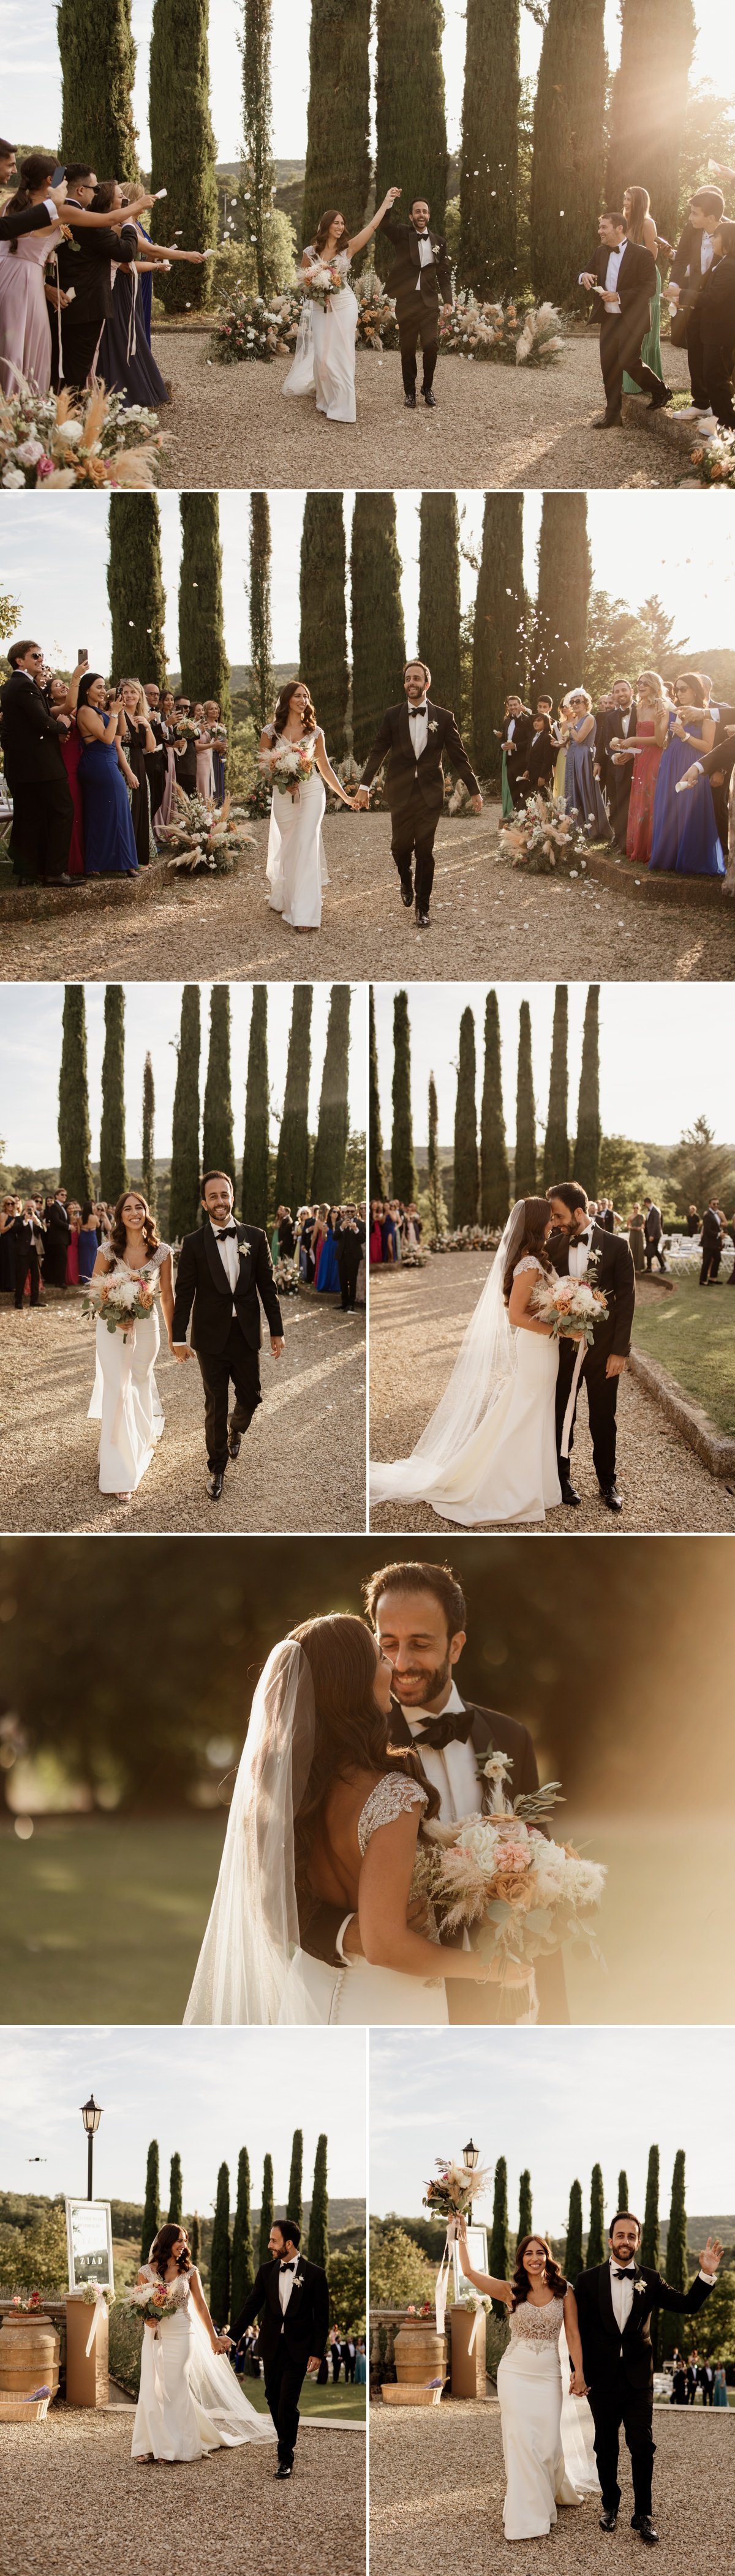 tuscany-wedding-dallk-14.jpg